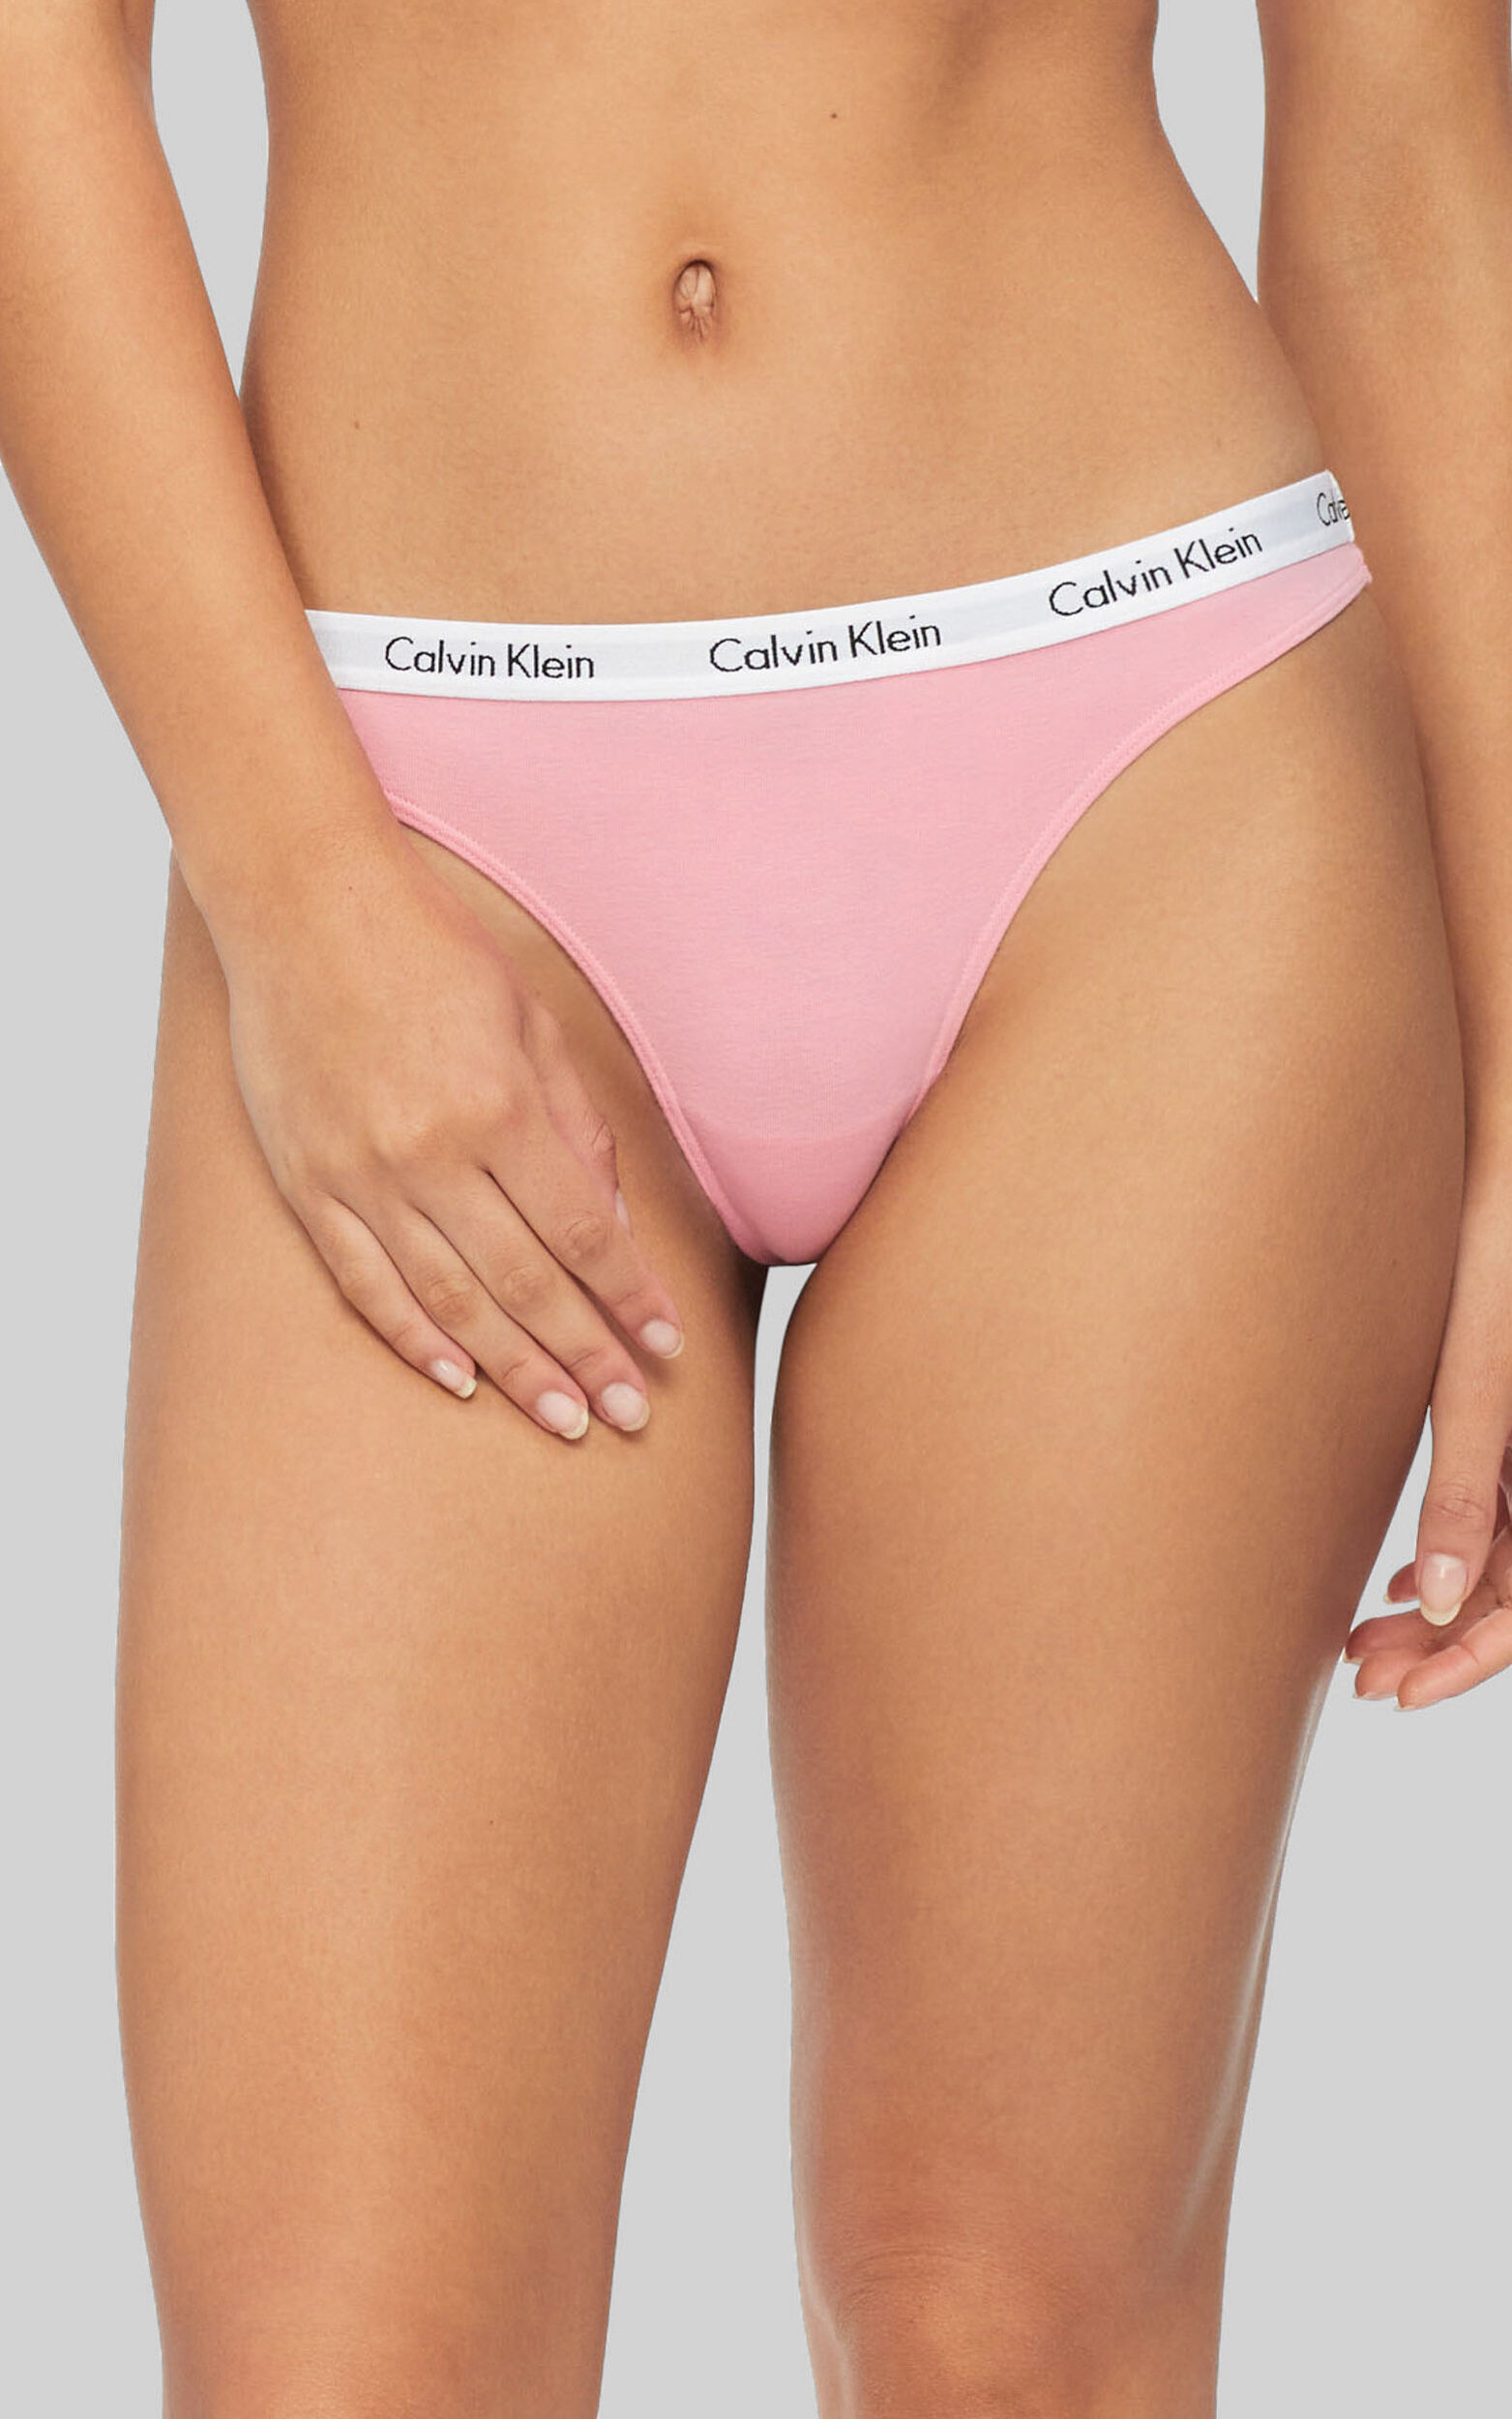 Calvin Klein - Pride Carousel Thong 5 pack in Multi Pack